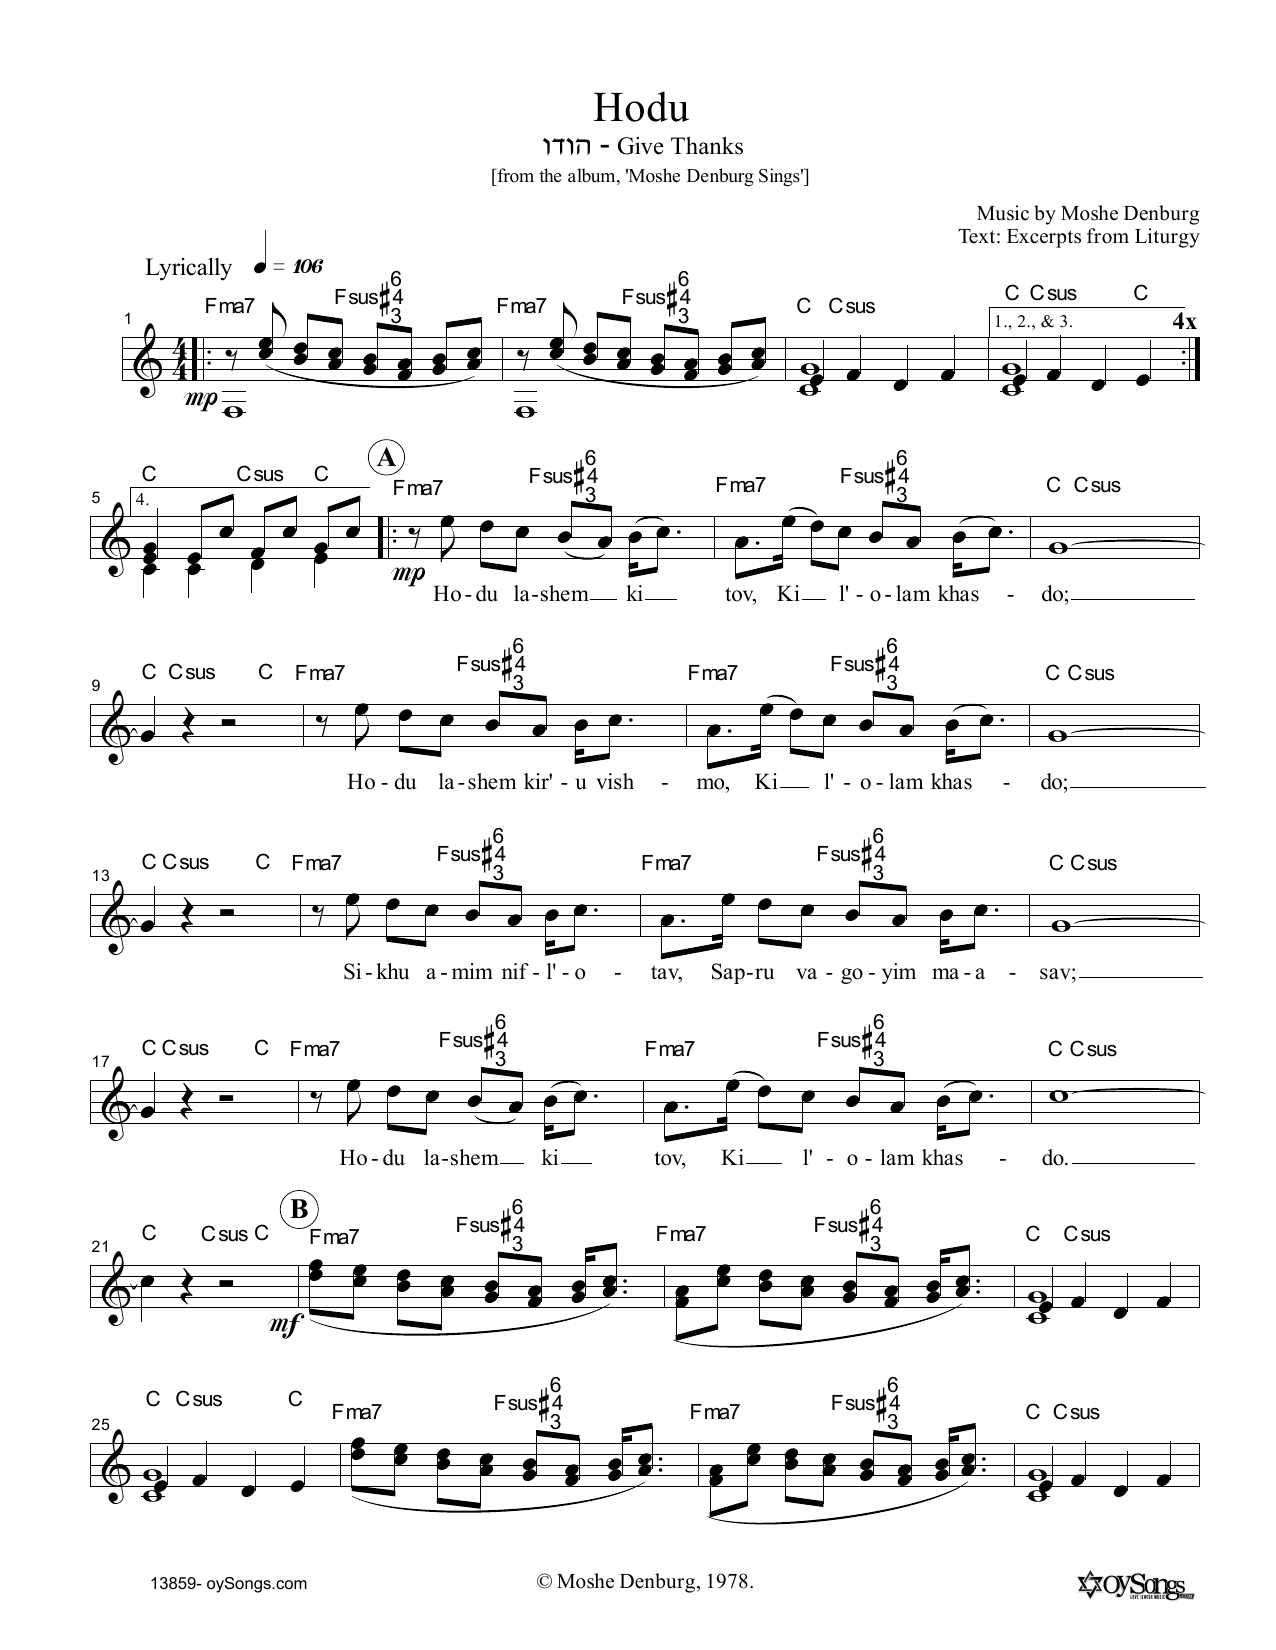 Moshe Denburg Hodu Sheet Music Notes & Chords for Melody Line, Lyrics & Chords - Download or Print PDF